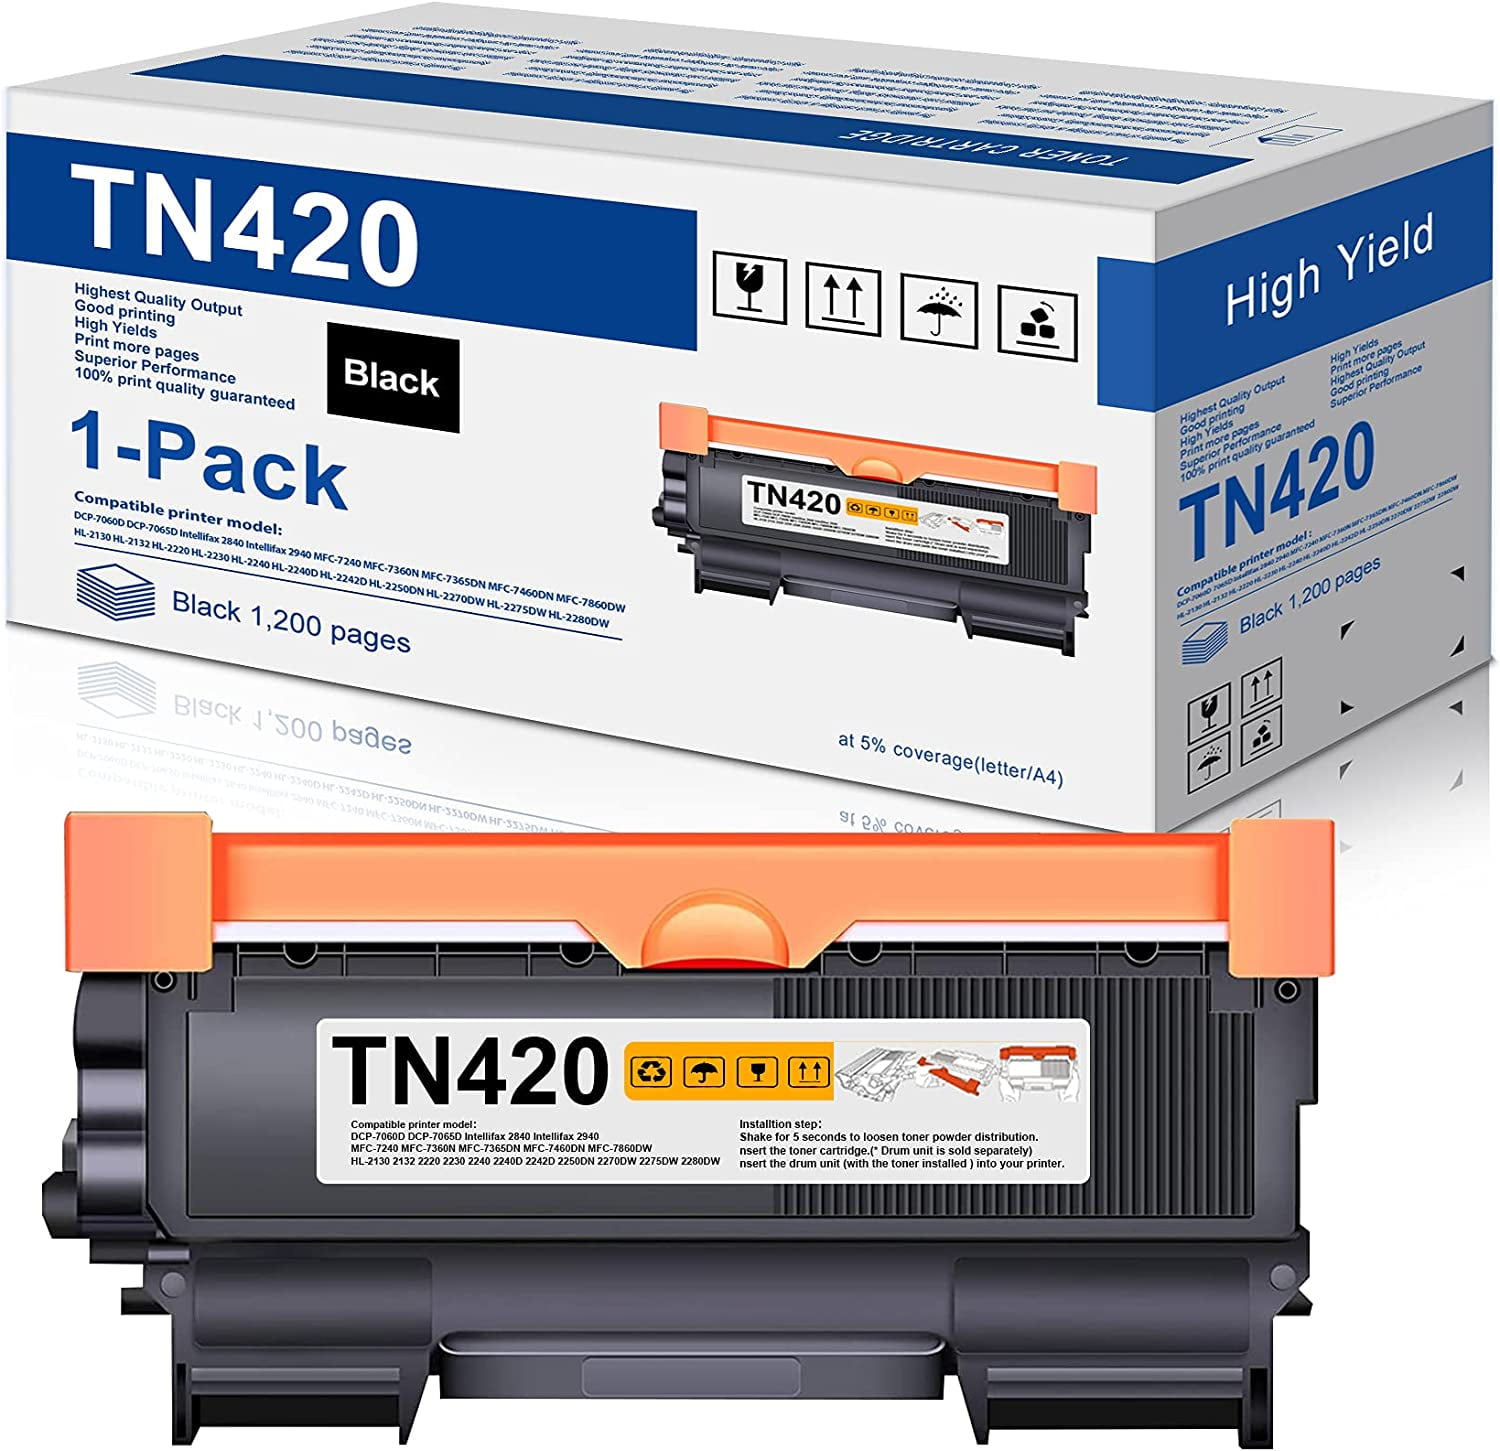 TN420 Black Toner Cartridge Brother Printer - Walmart.com